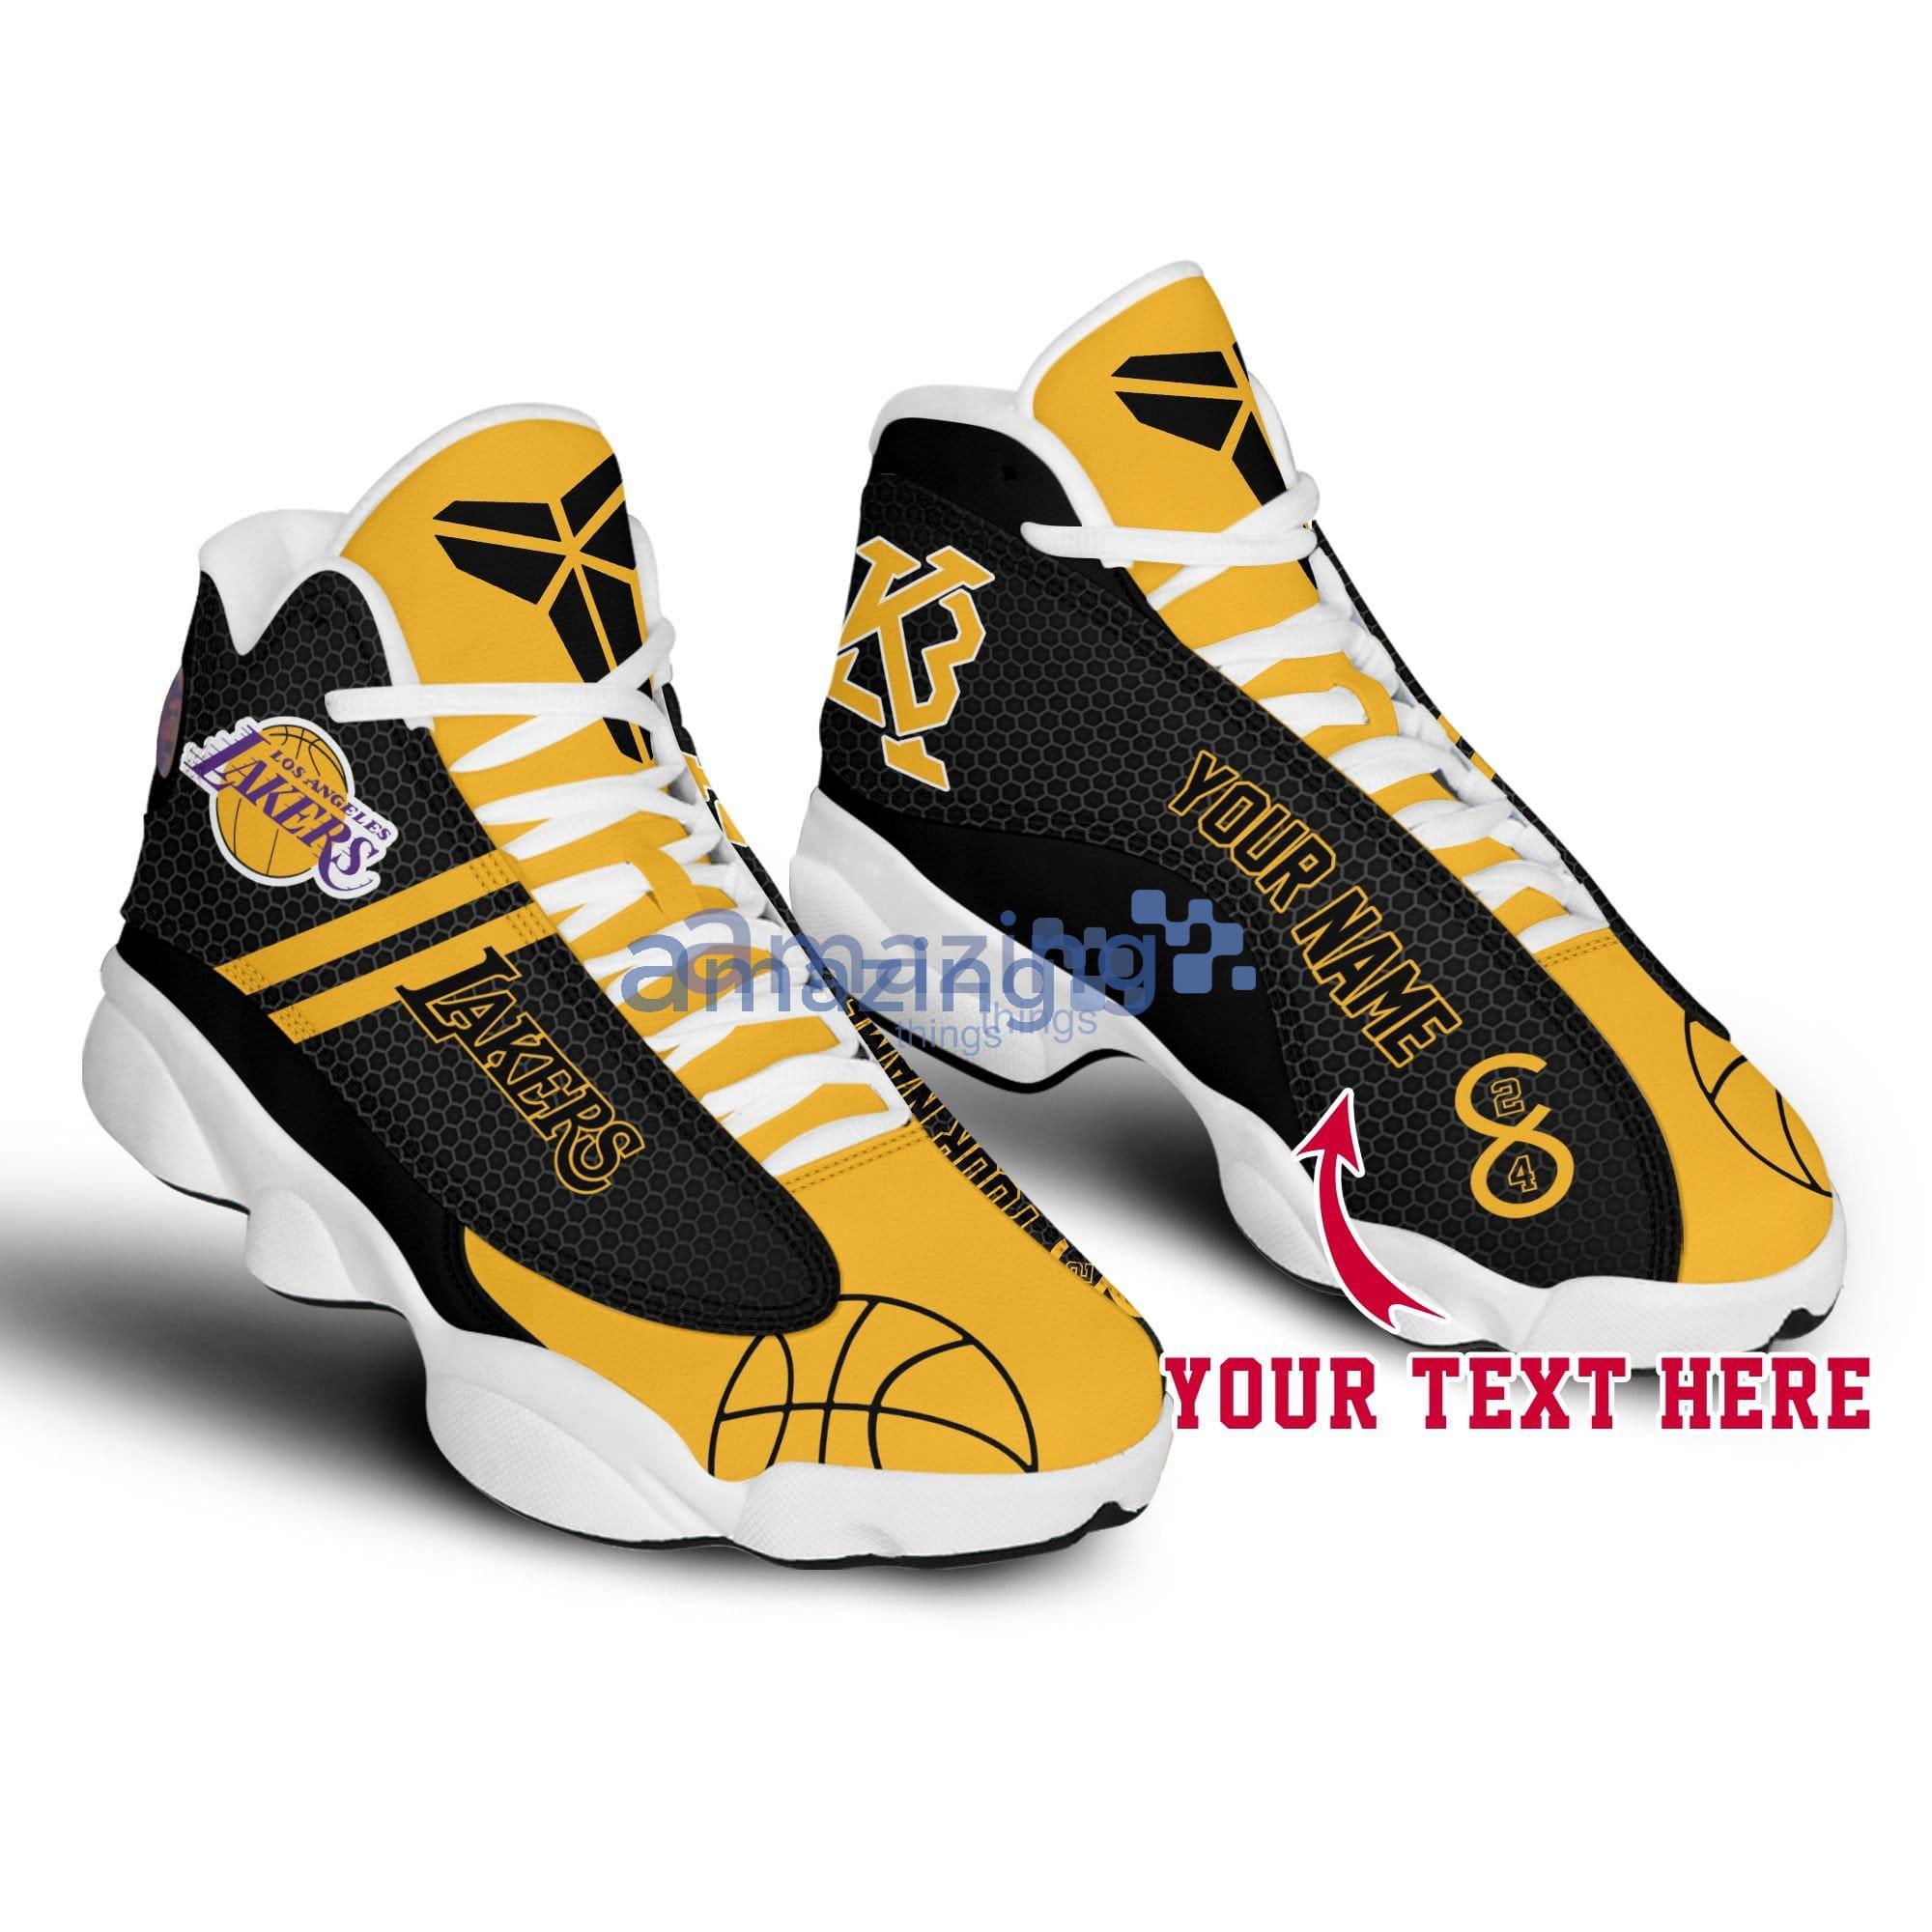 Kobe bryant air jordan 13 sneaker - custom shoes athletic run casual  hypebeast shoes - kobe bryant basketball shoes - customized name shoes